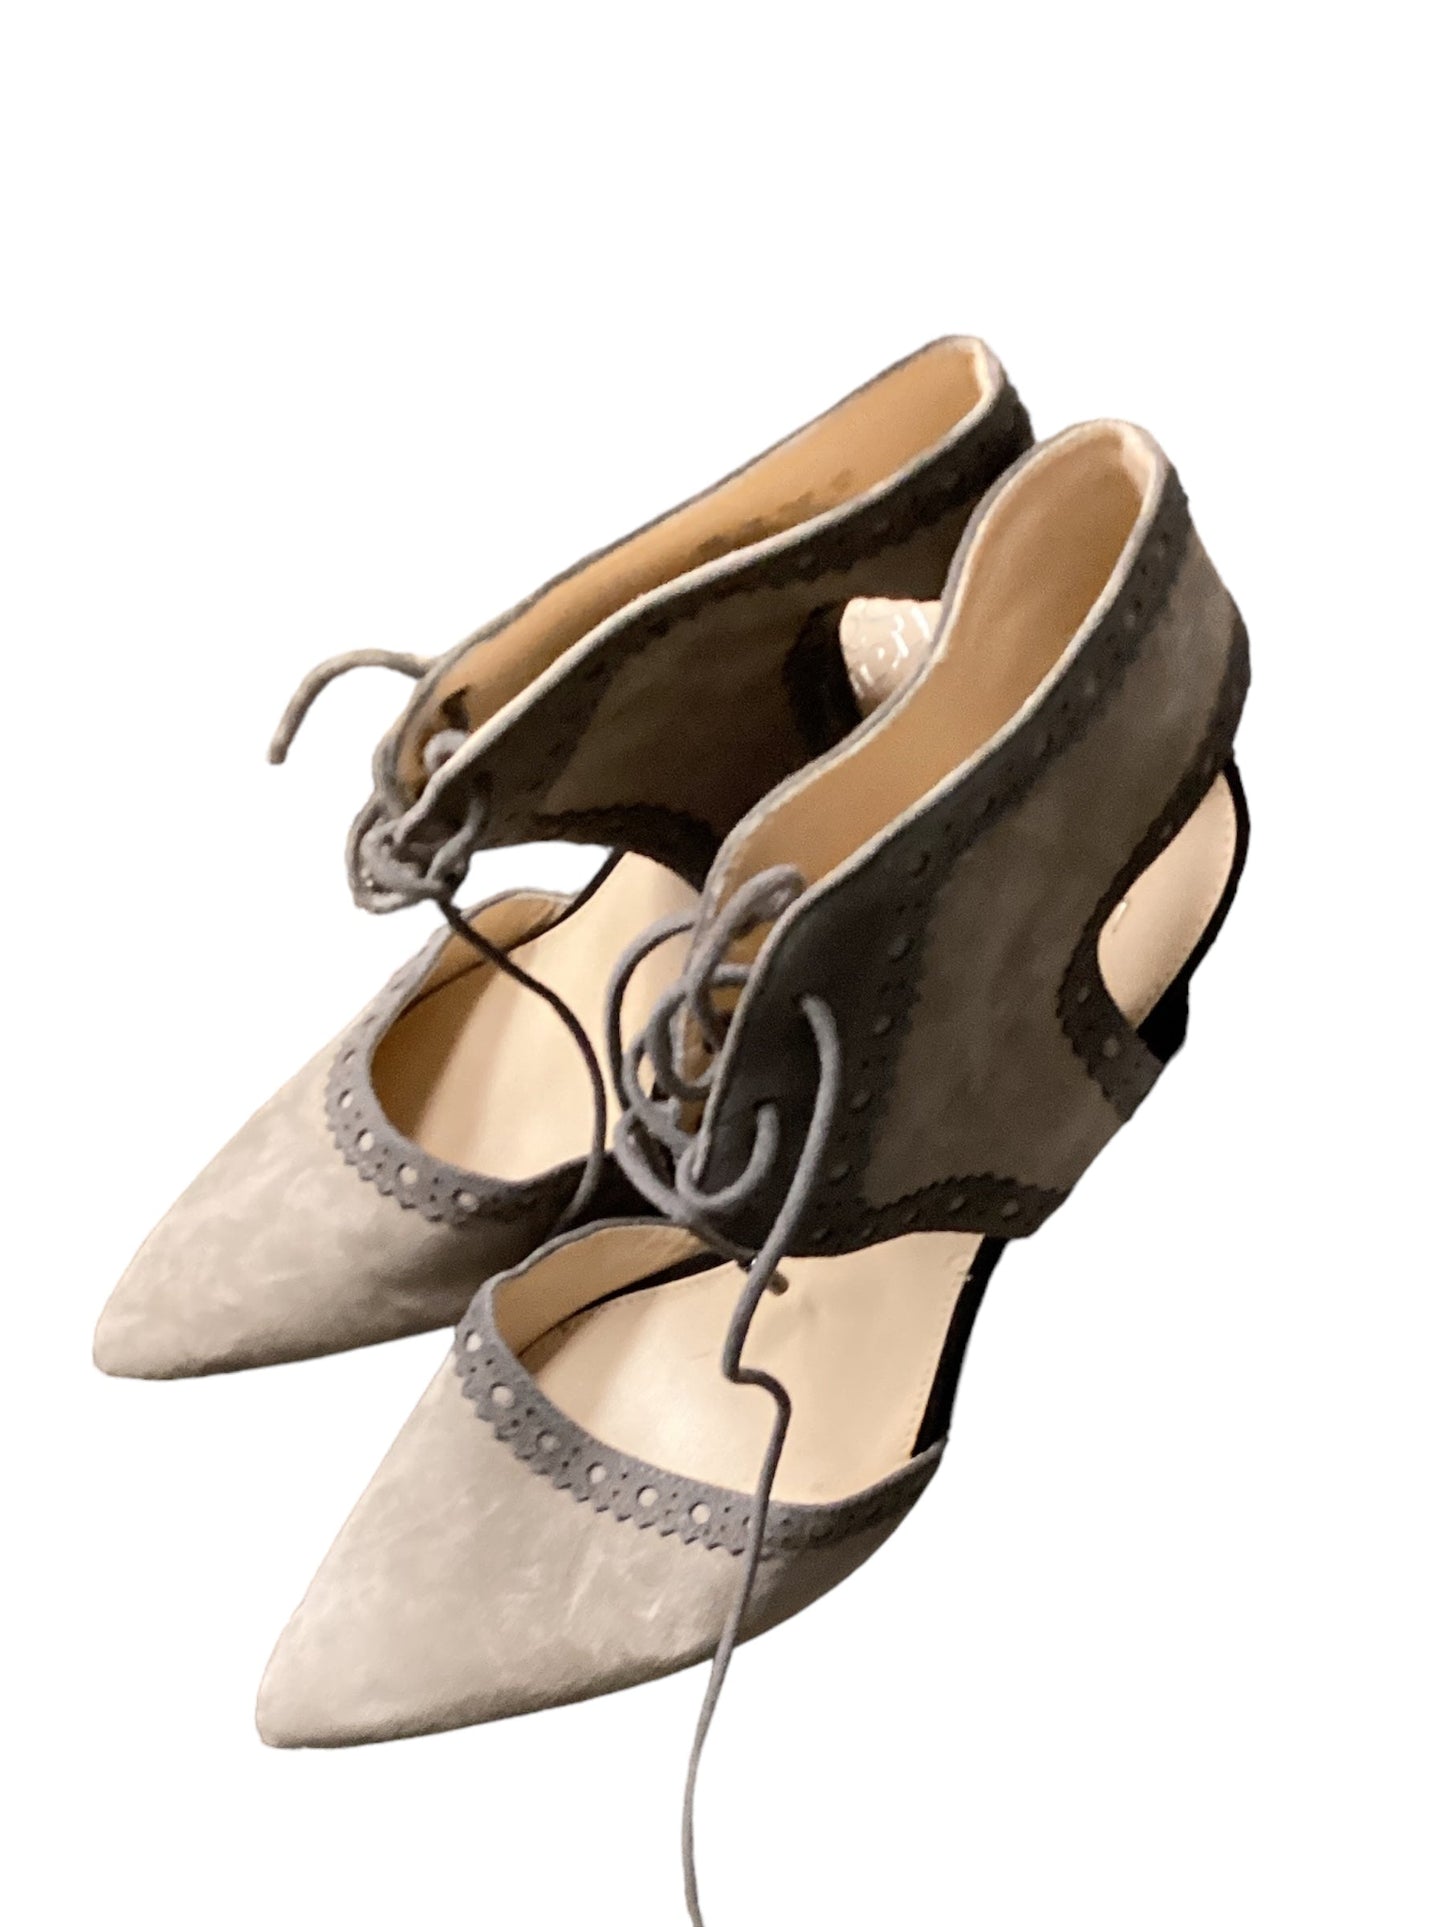 Grey Shoes Heels Stiletto Franco Sarto, Size 9